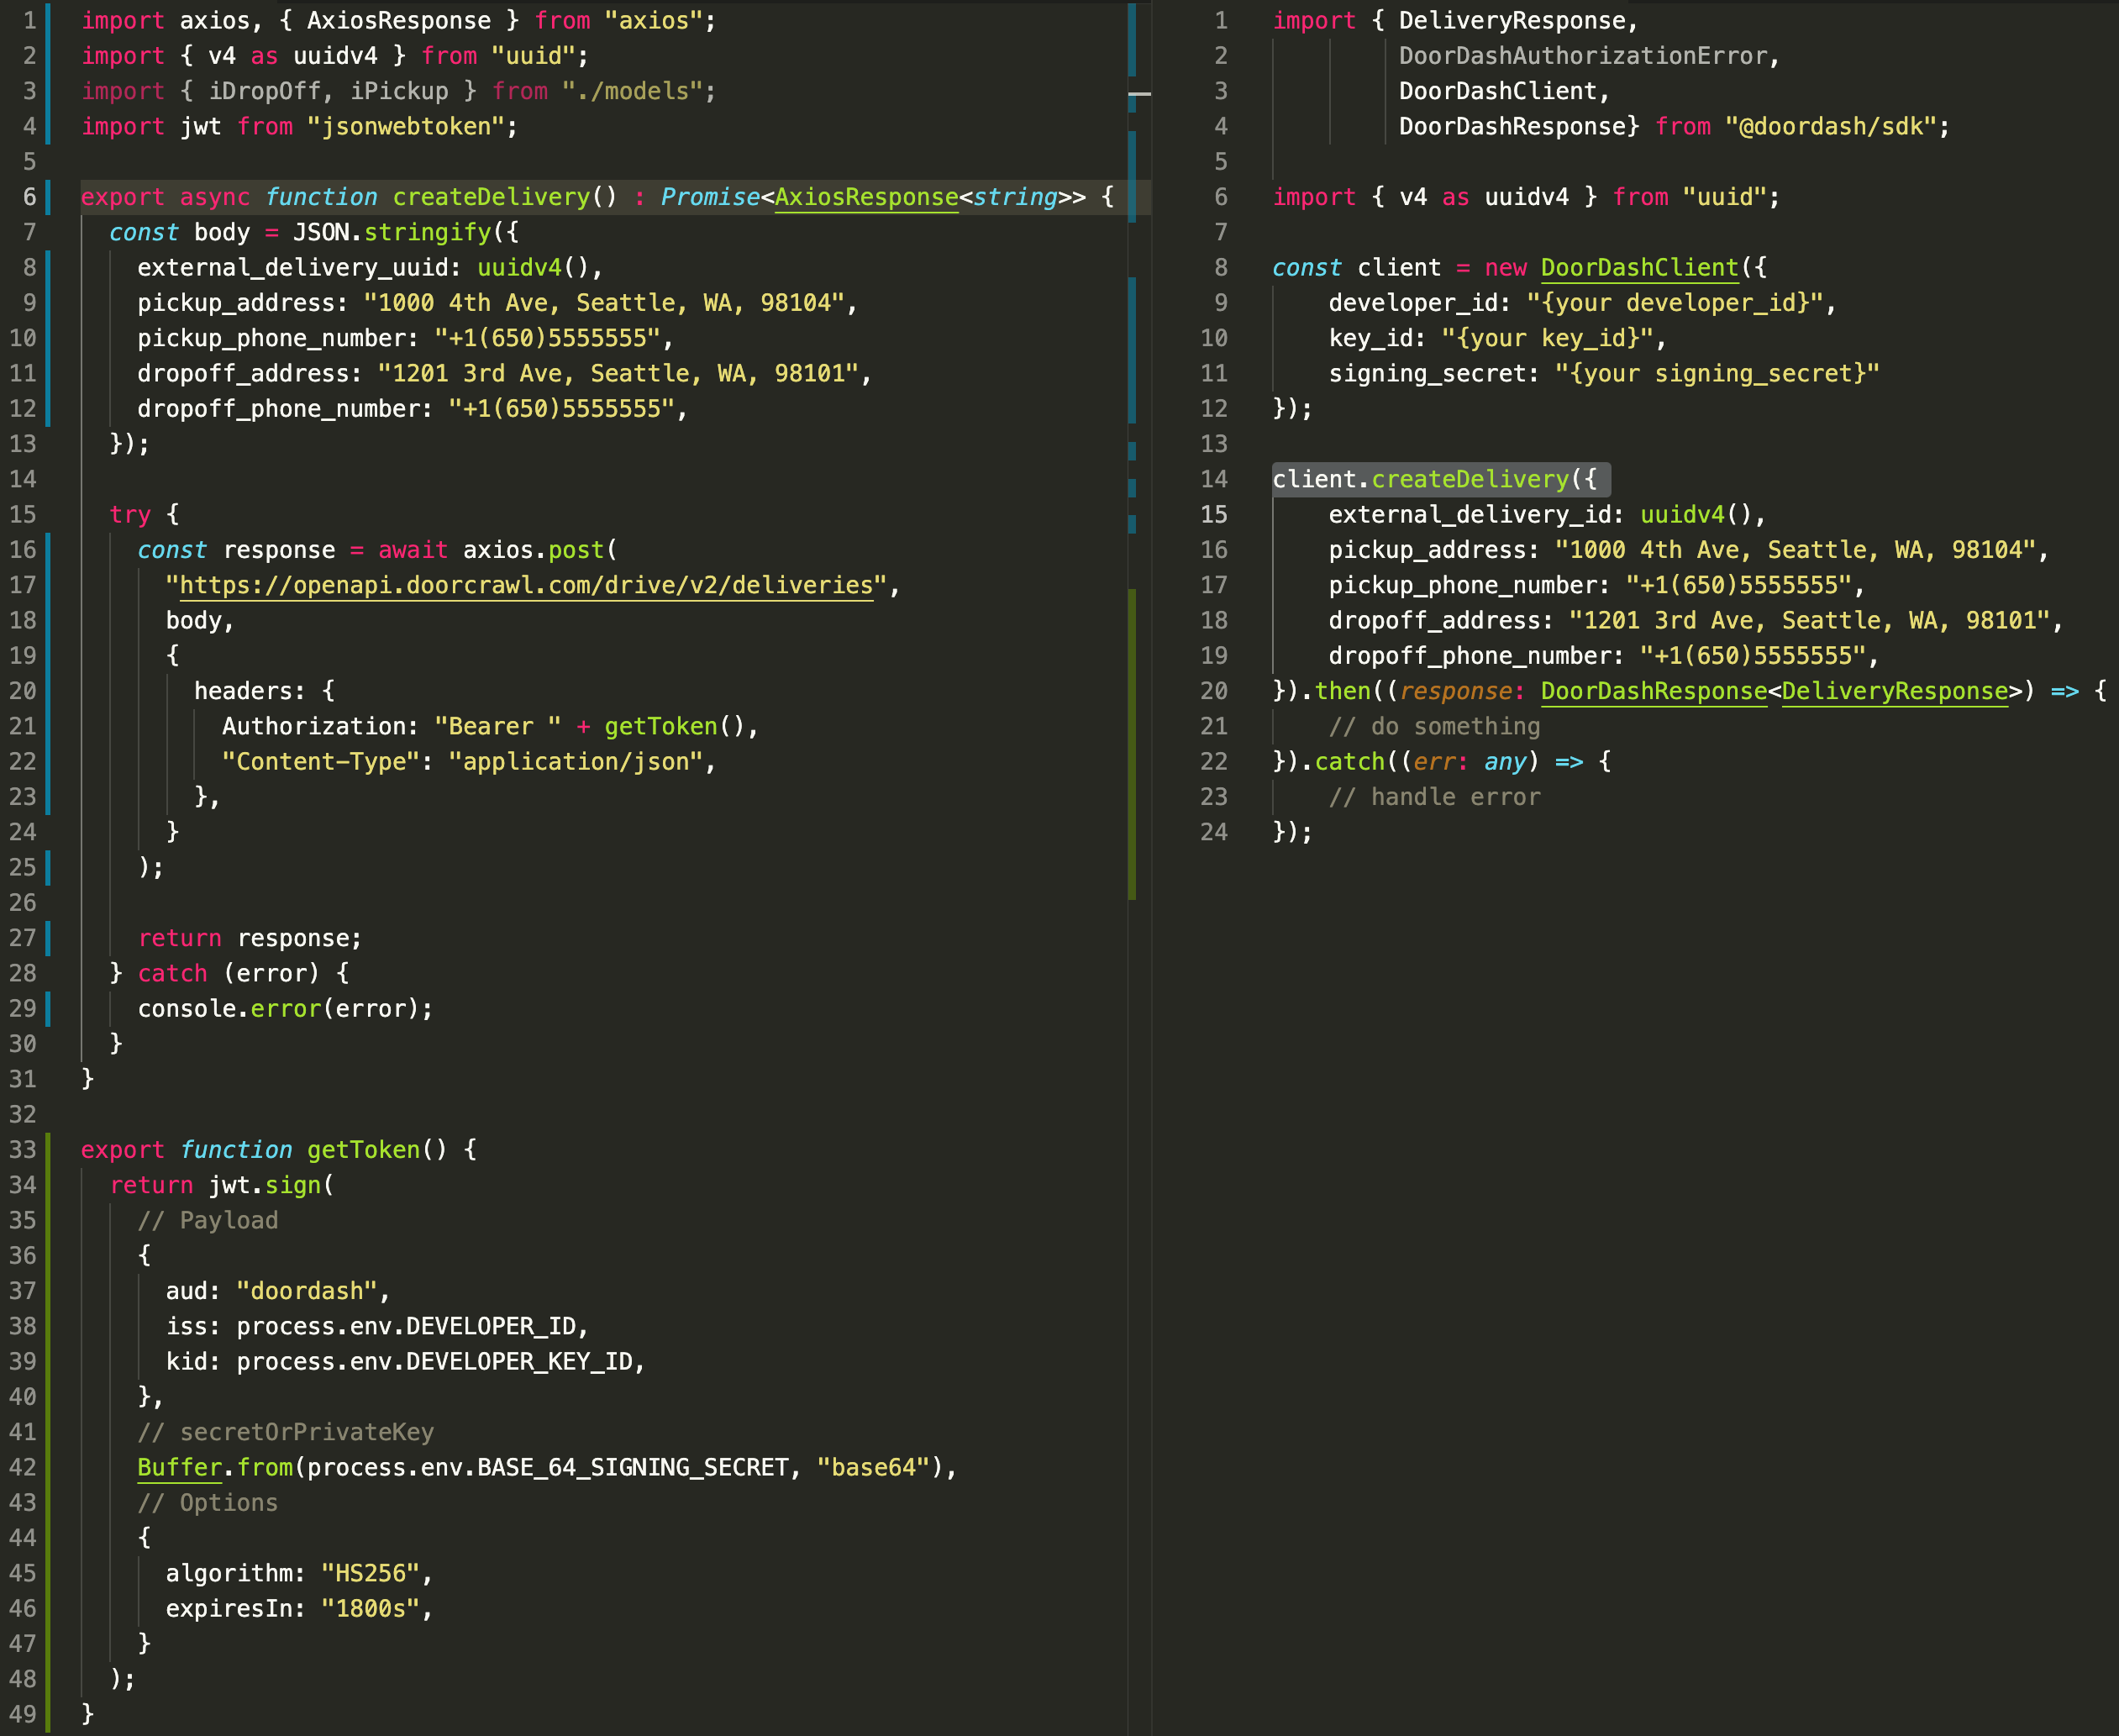 A screenshot comparing JavaScript code calling the APIs directly vs. using the DoorDash Node.js SDK